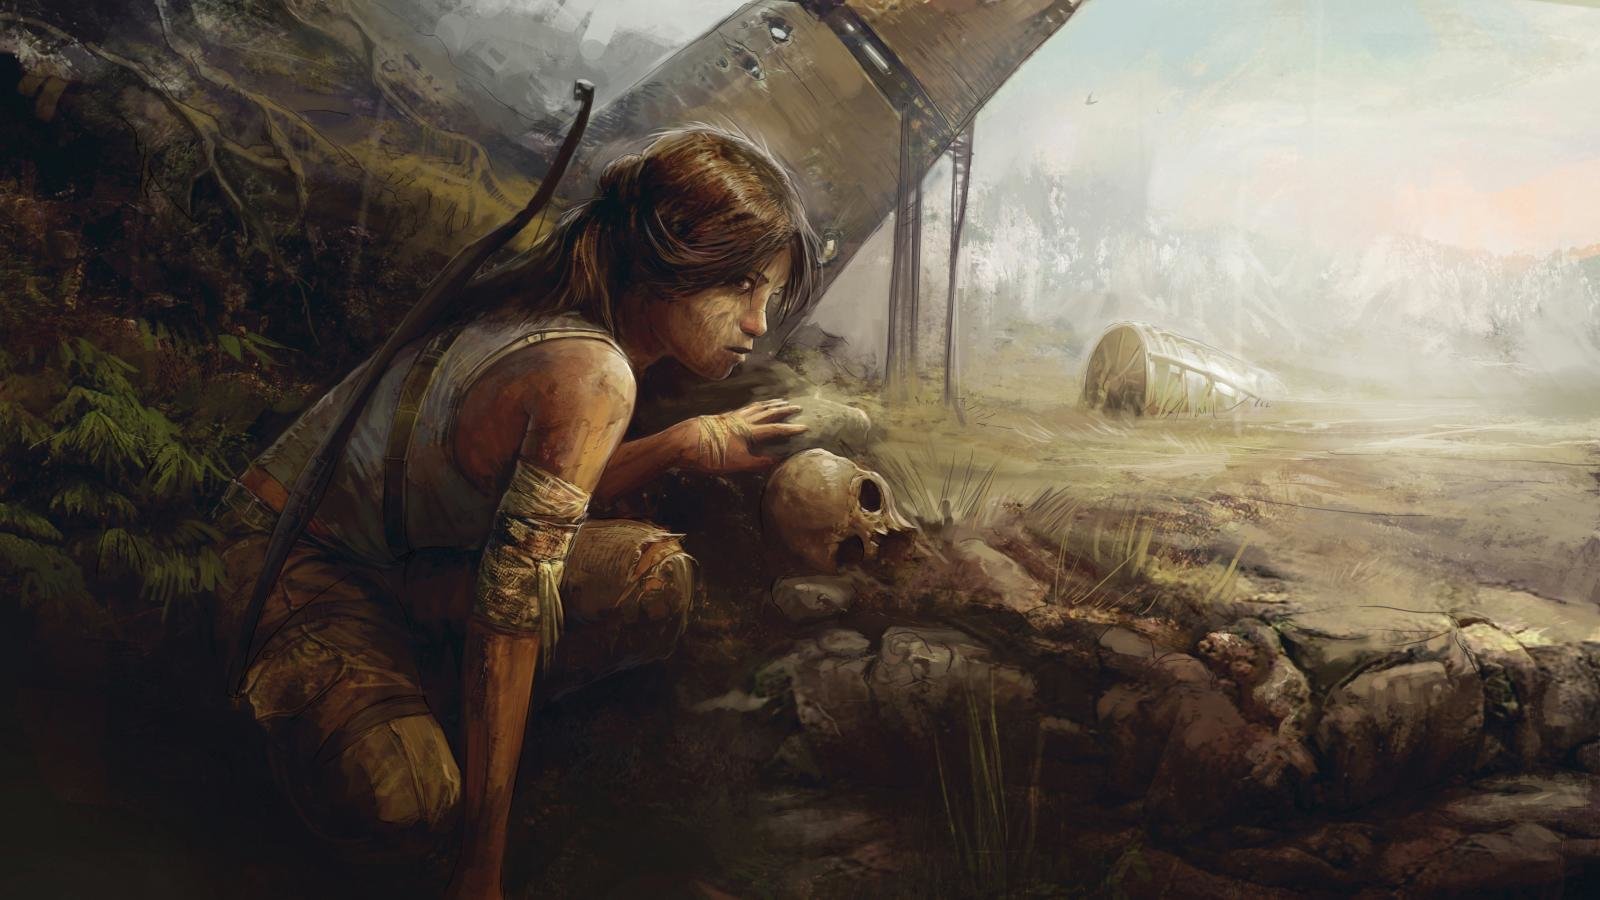 Best Tomb Raider (Lara Croft) background ID:436898 for High Resolution hd 1600x900 computer